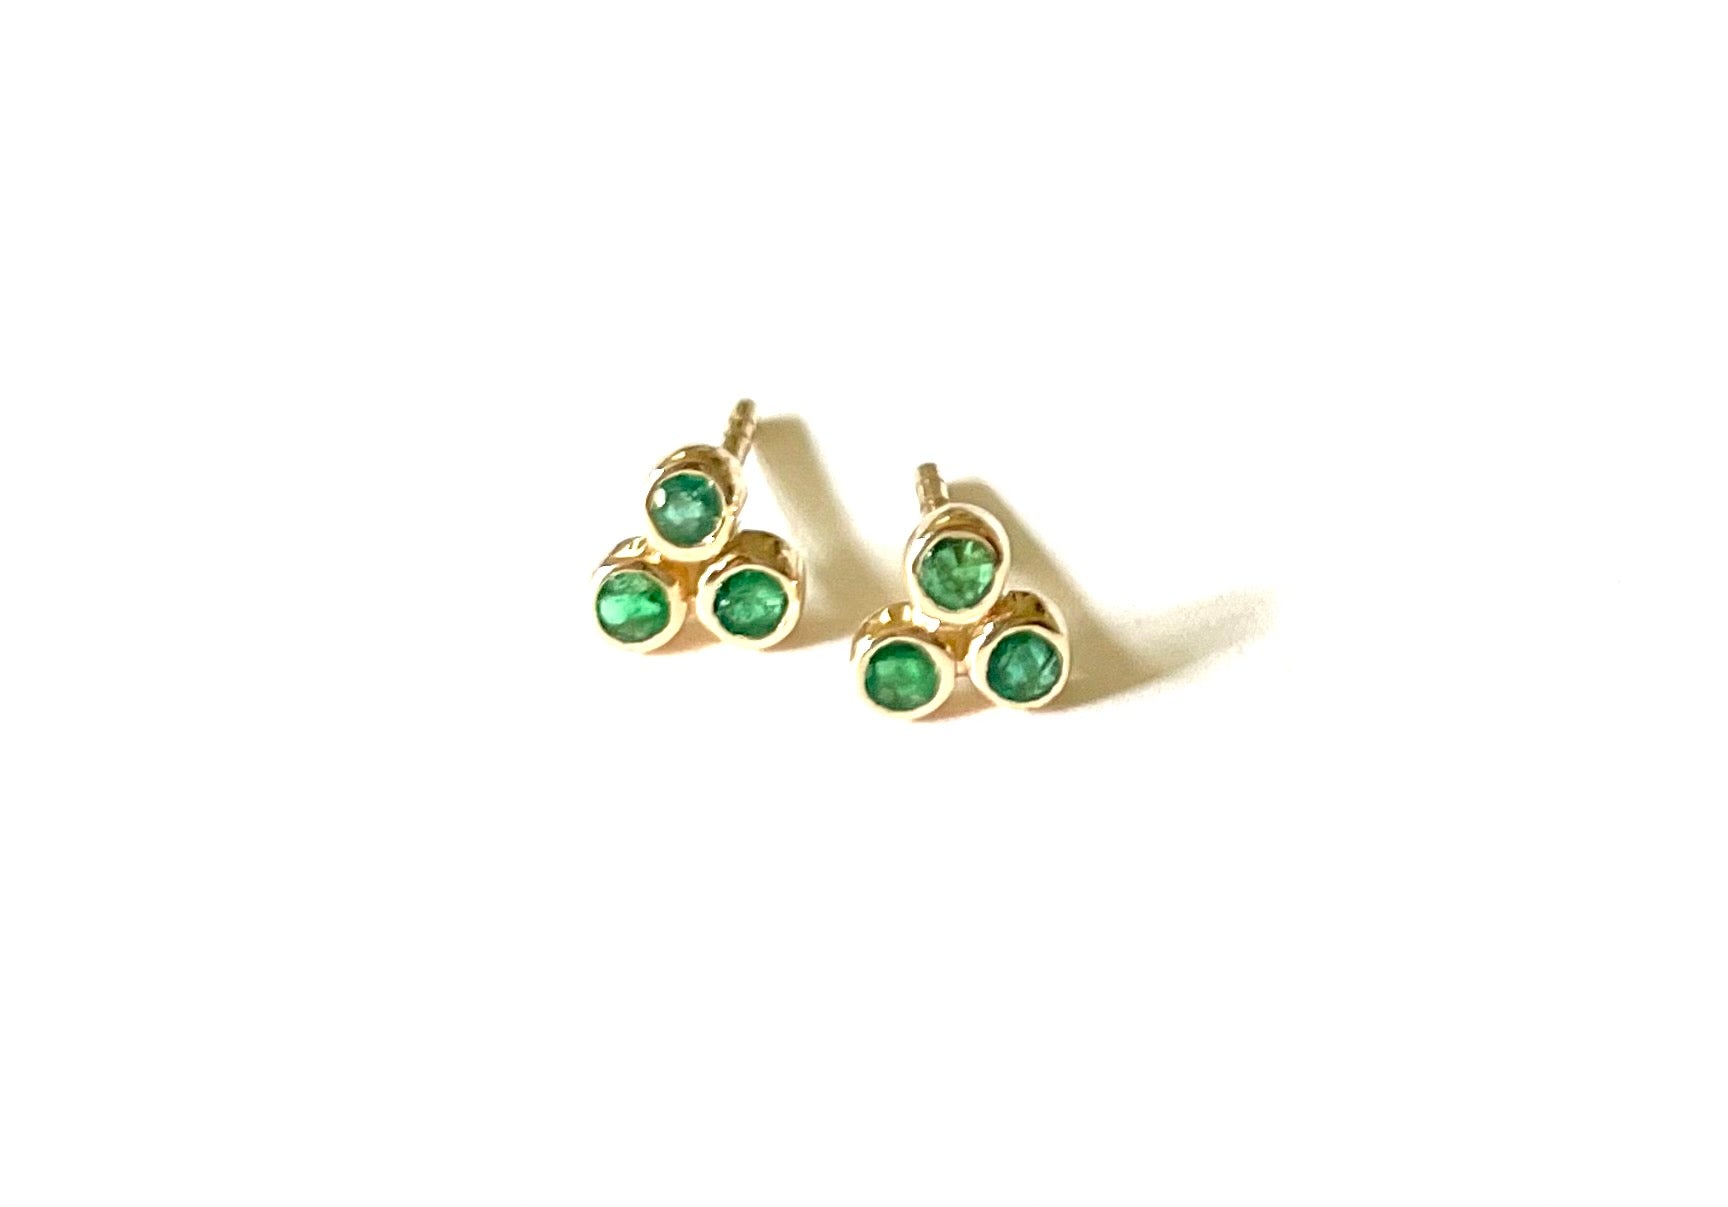 Buy Emerald Park Jewelry Treble Clef Music Symbol Snake Chain